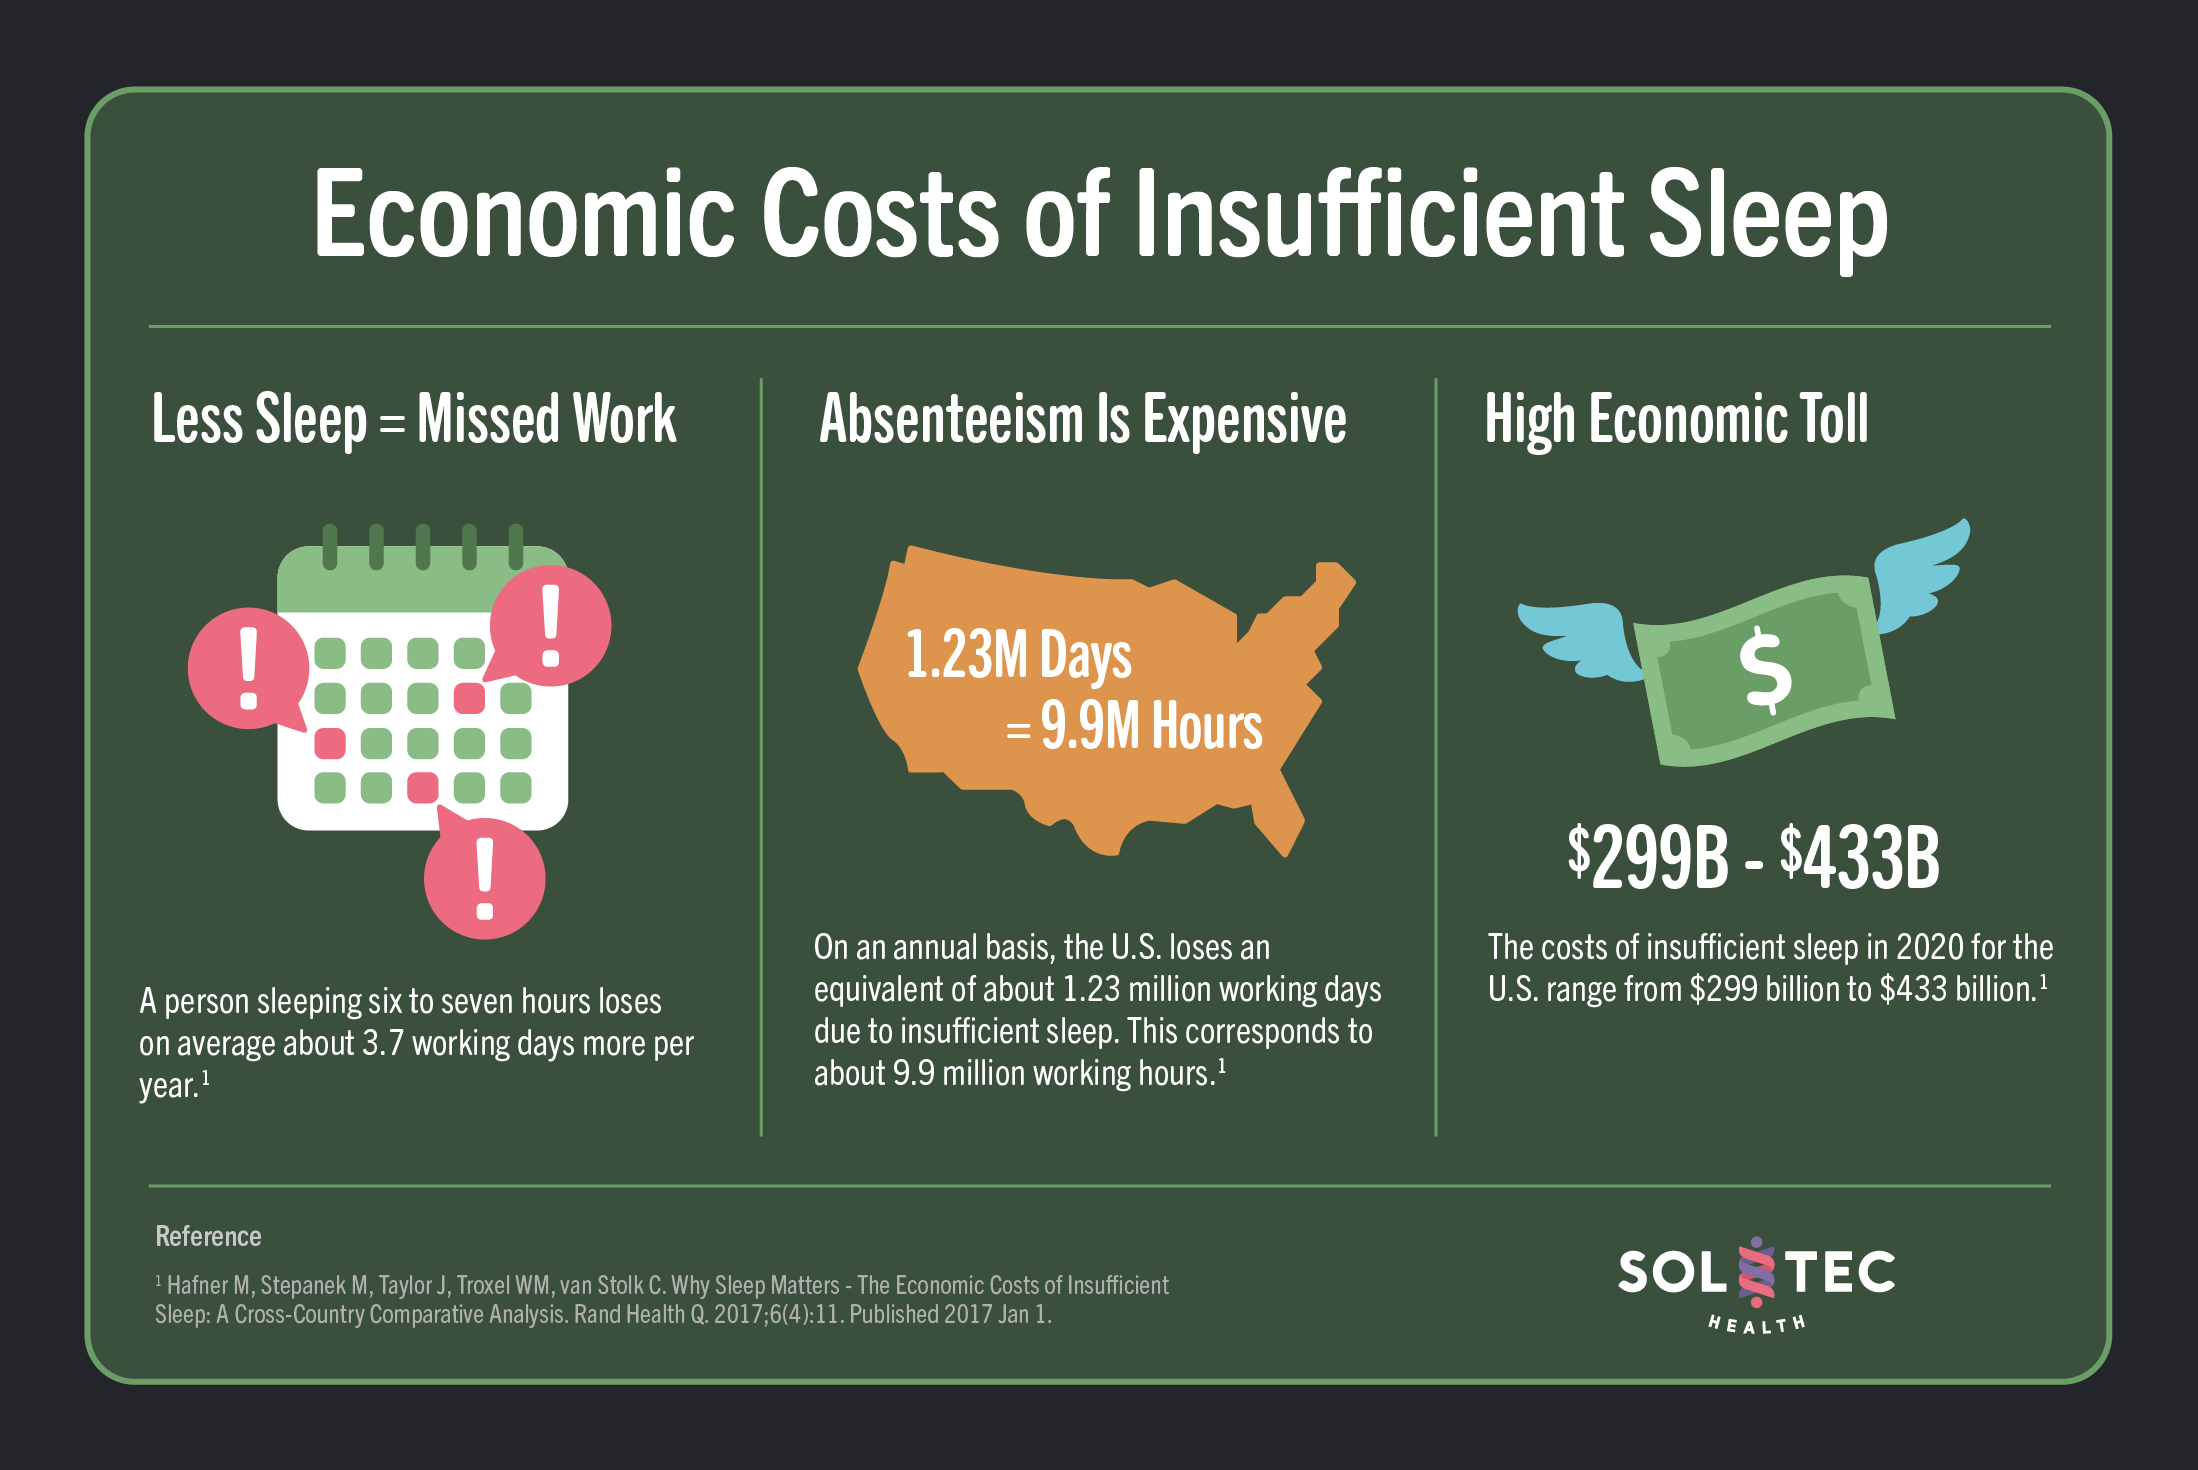 Economic Costs of Insufficient Sleep Image